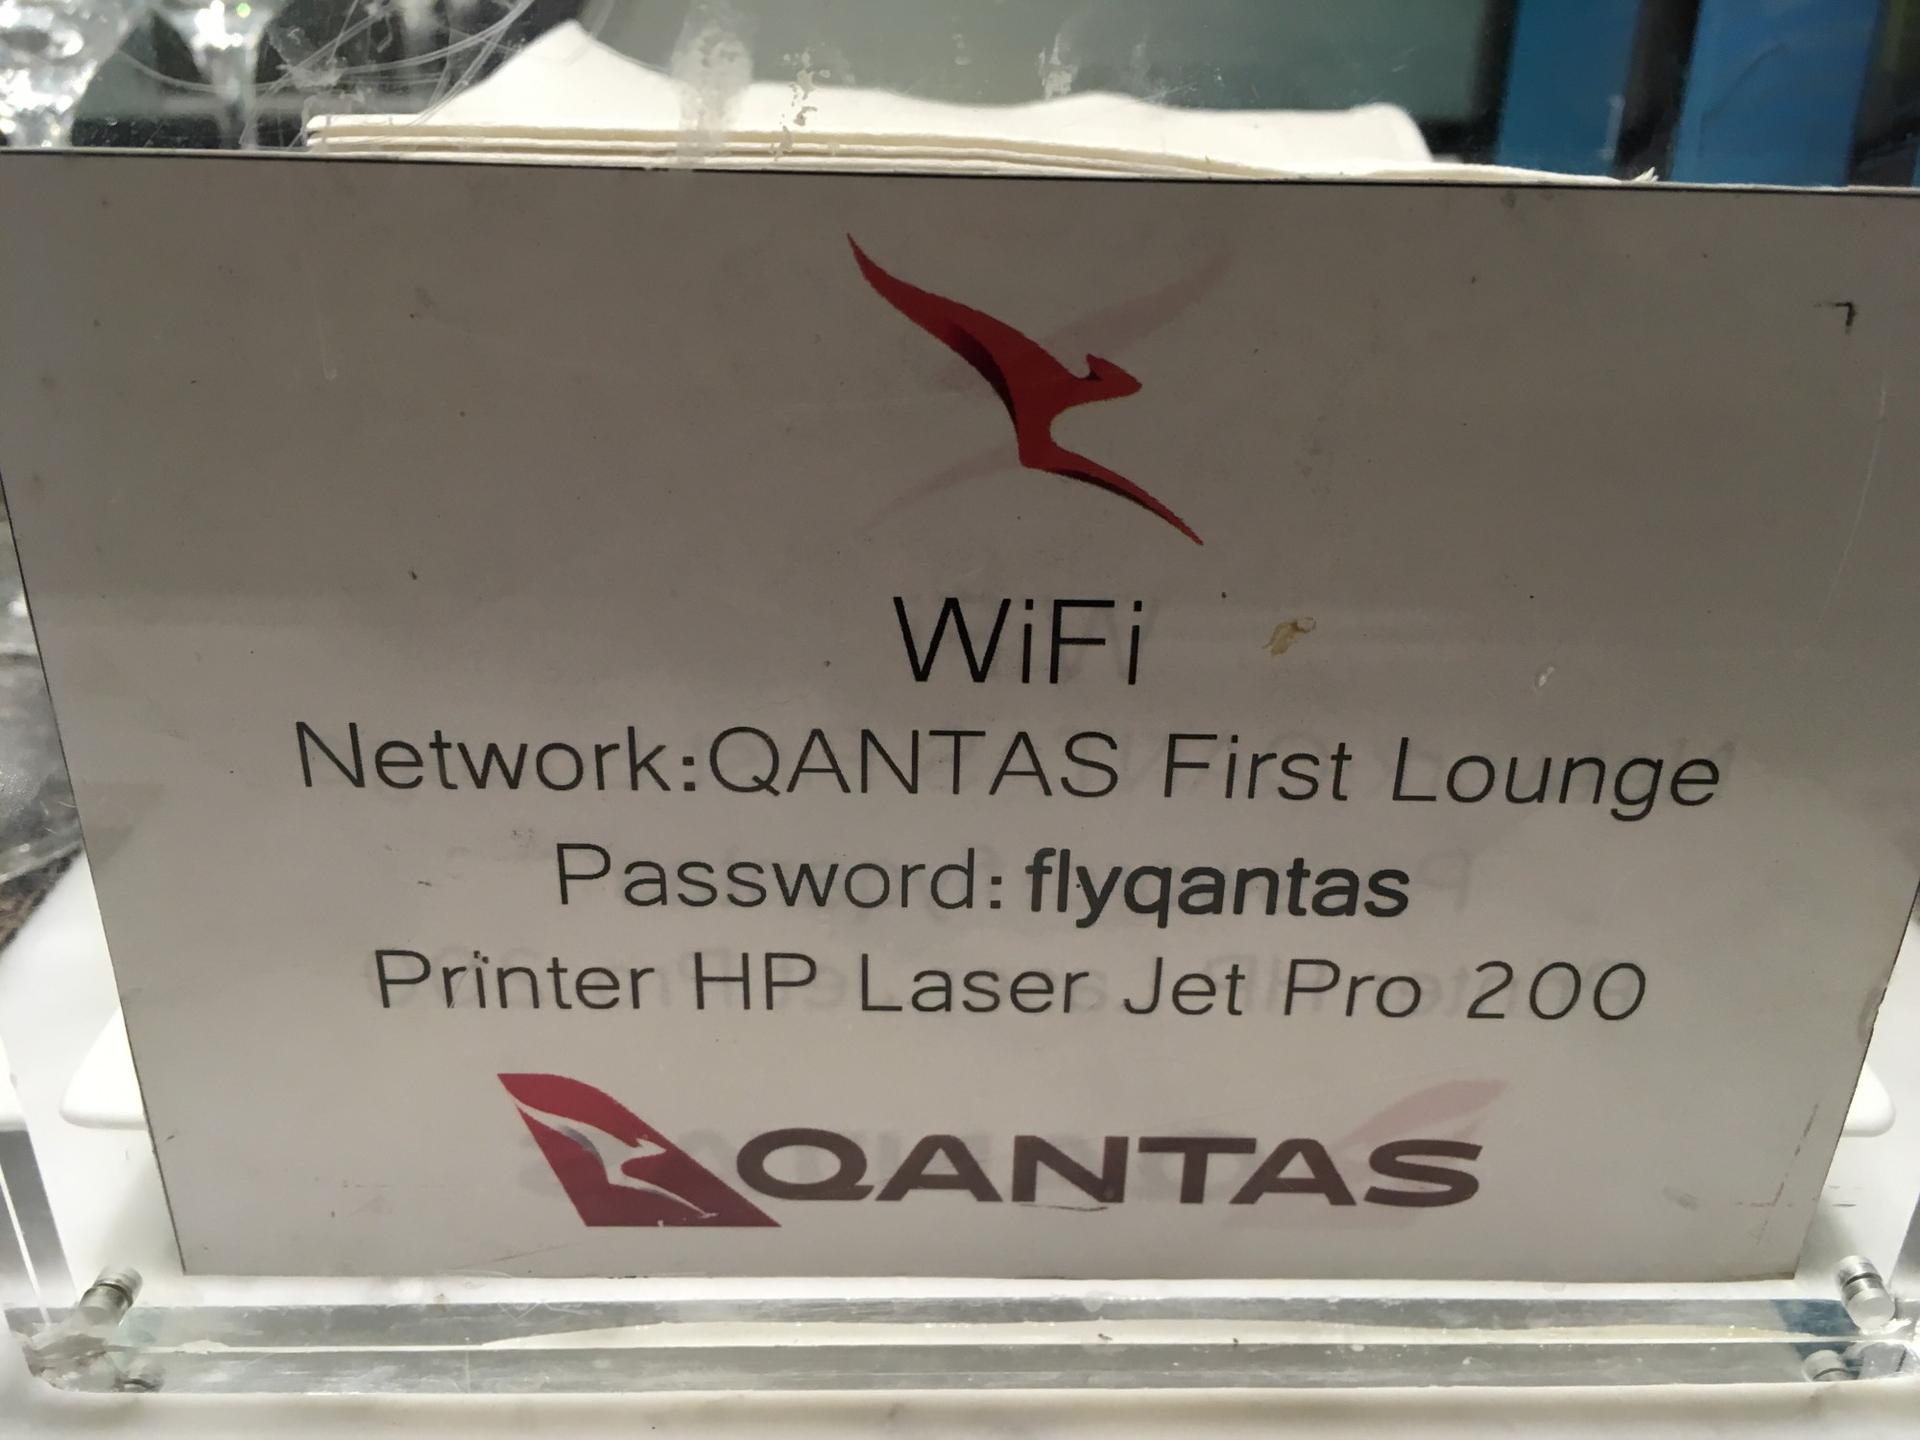 Qantas Airways International First Lounge image 43 of 77